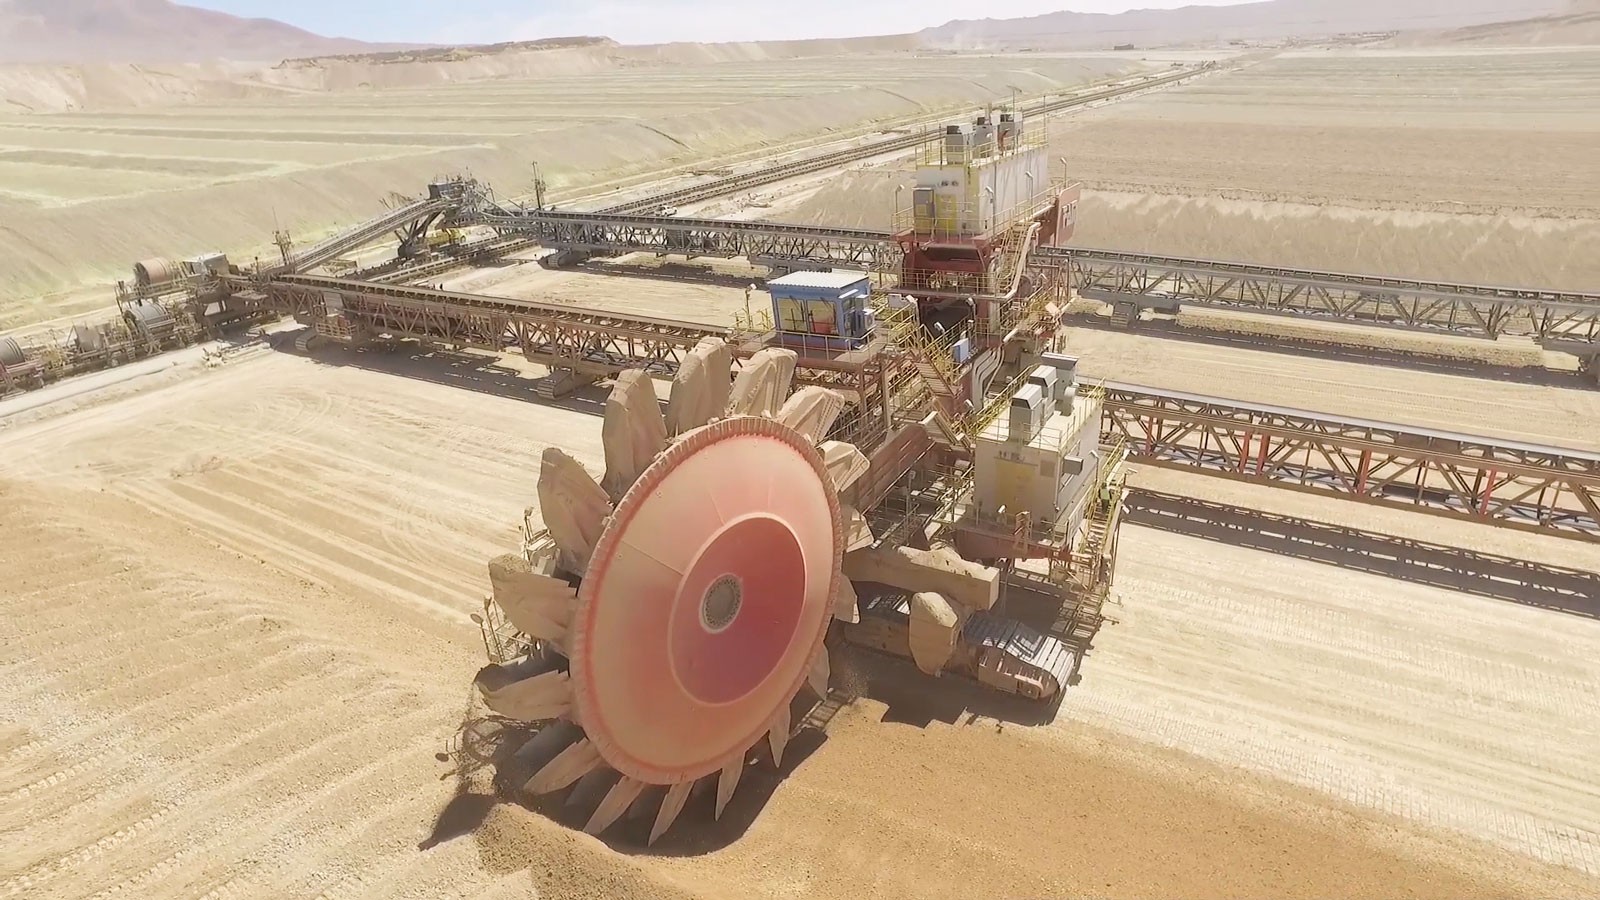 A massive mining bucket wheel.